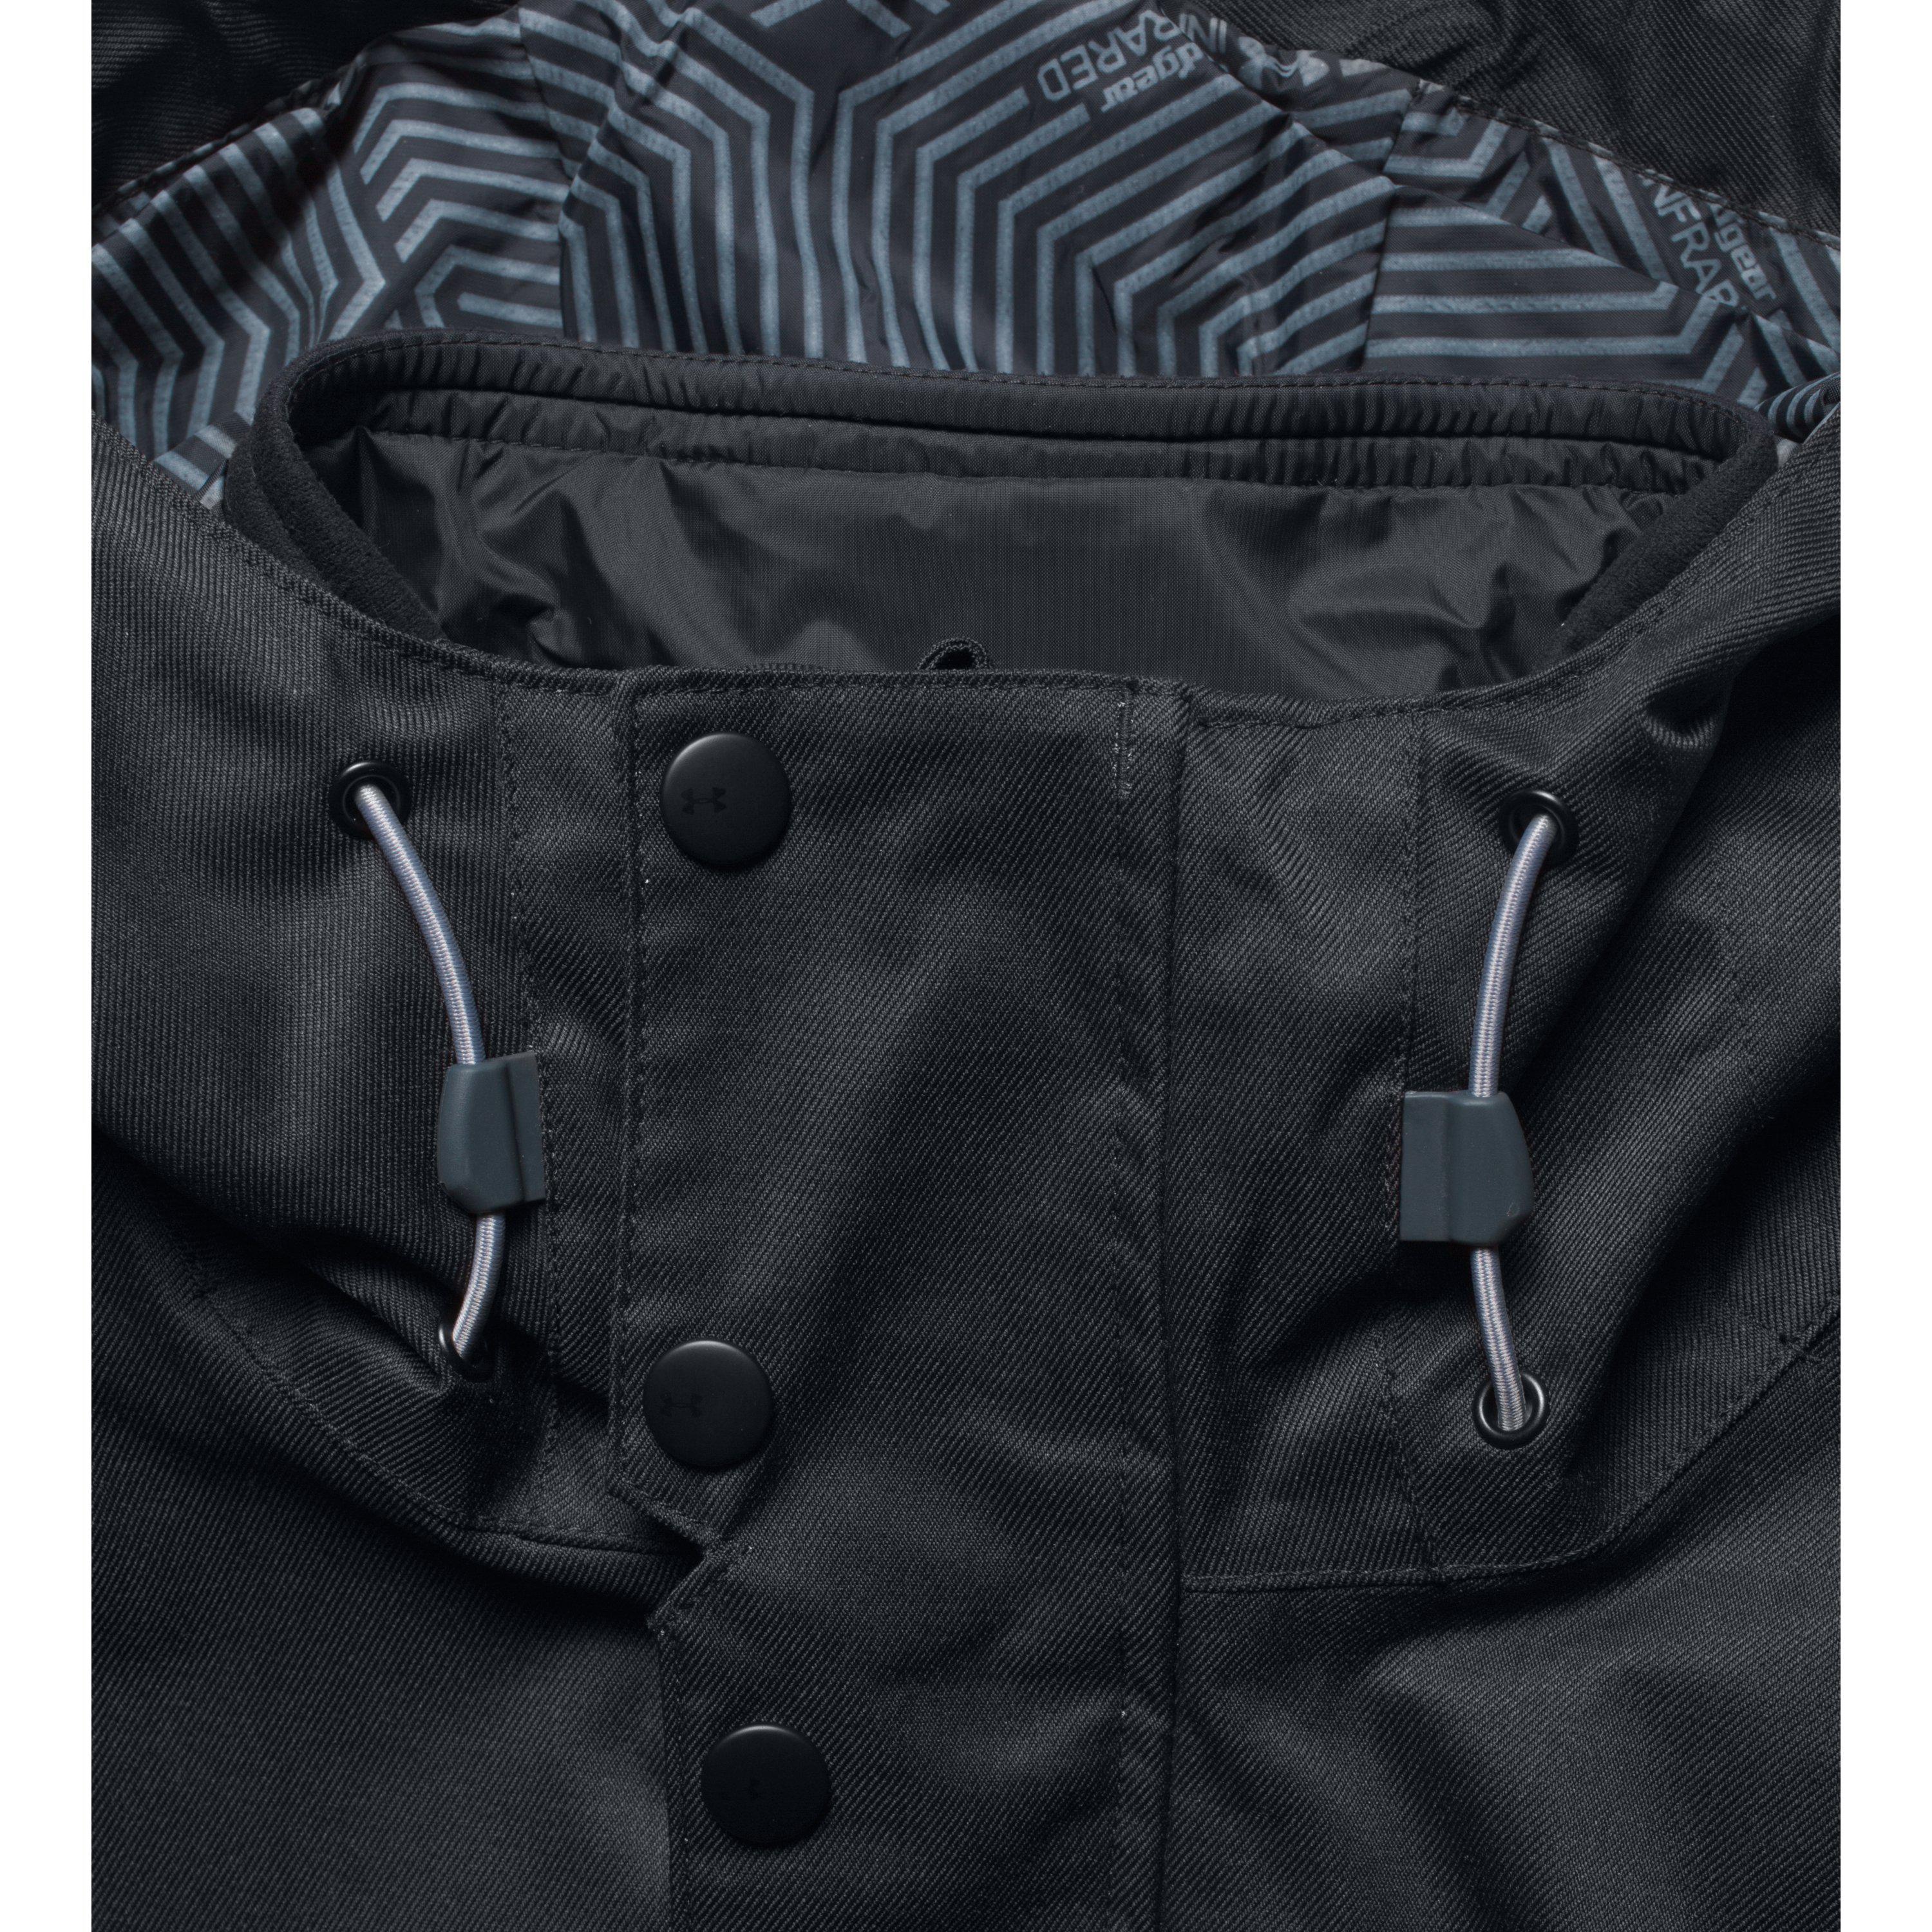 under armour coldgear infrared mens jacket